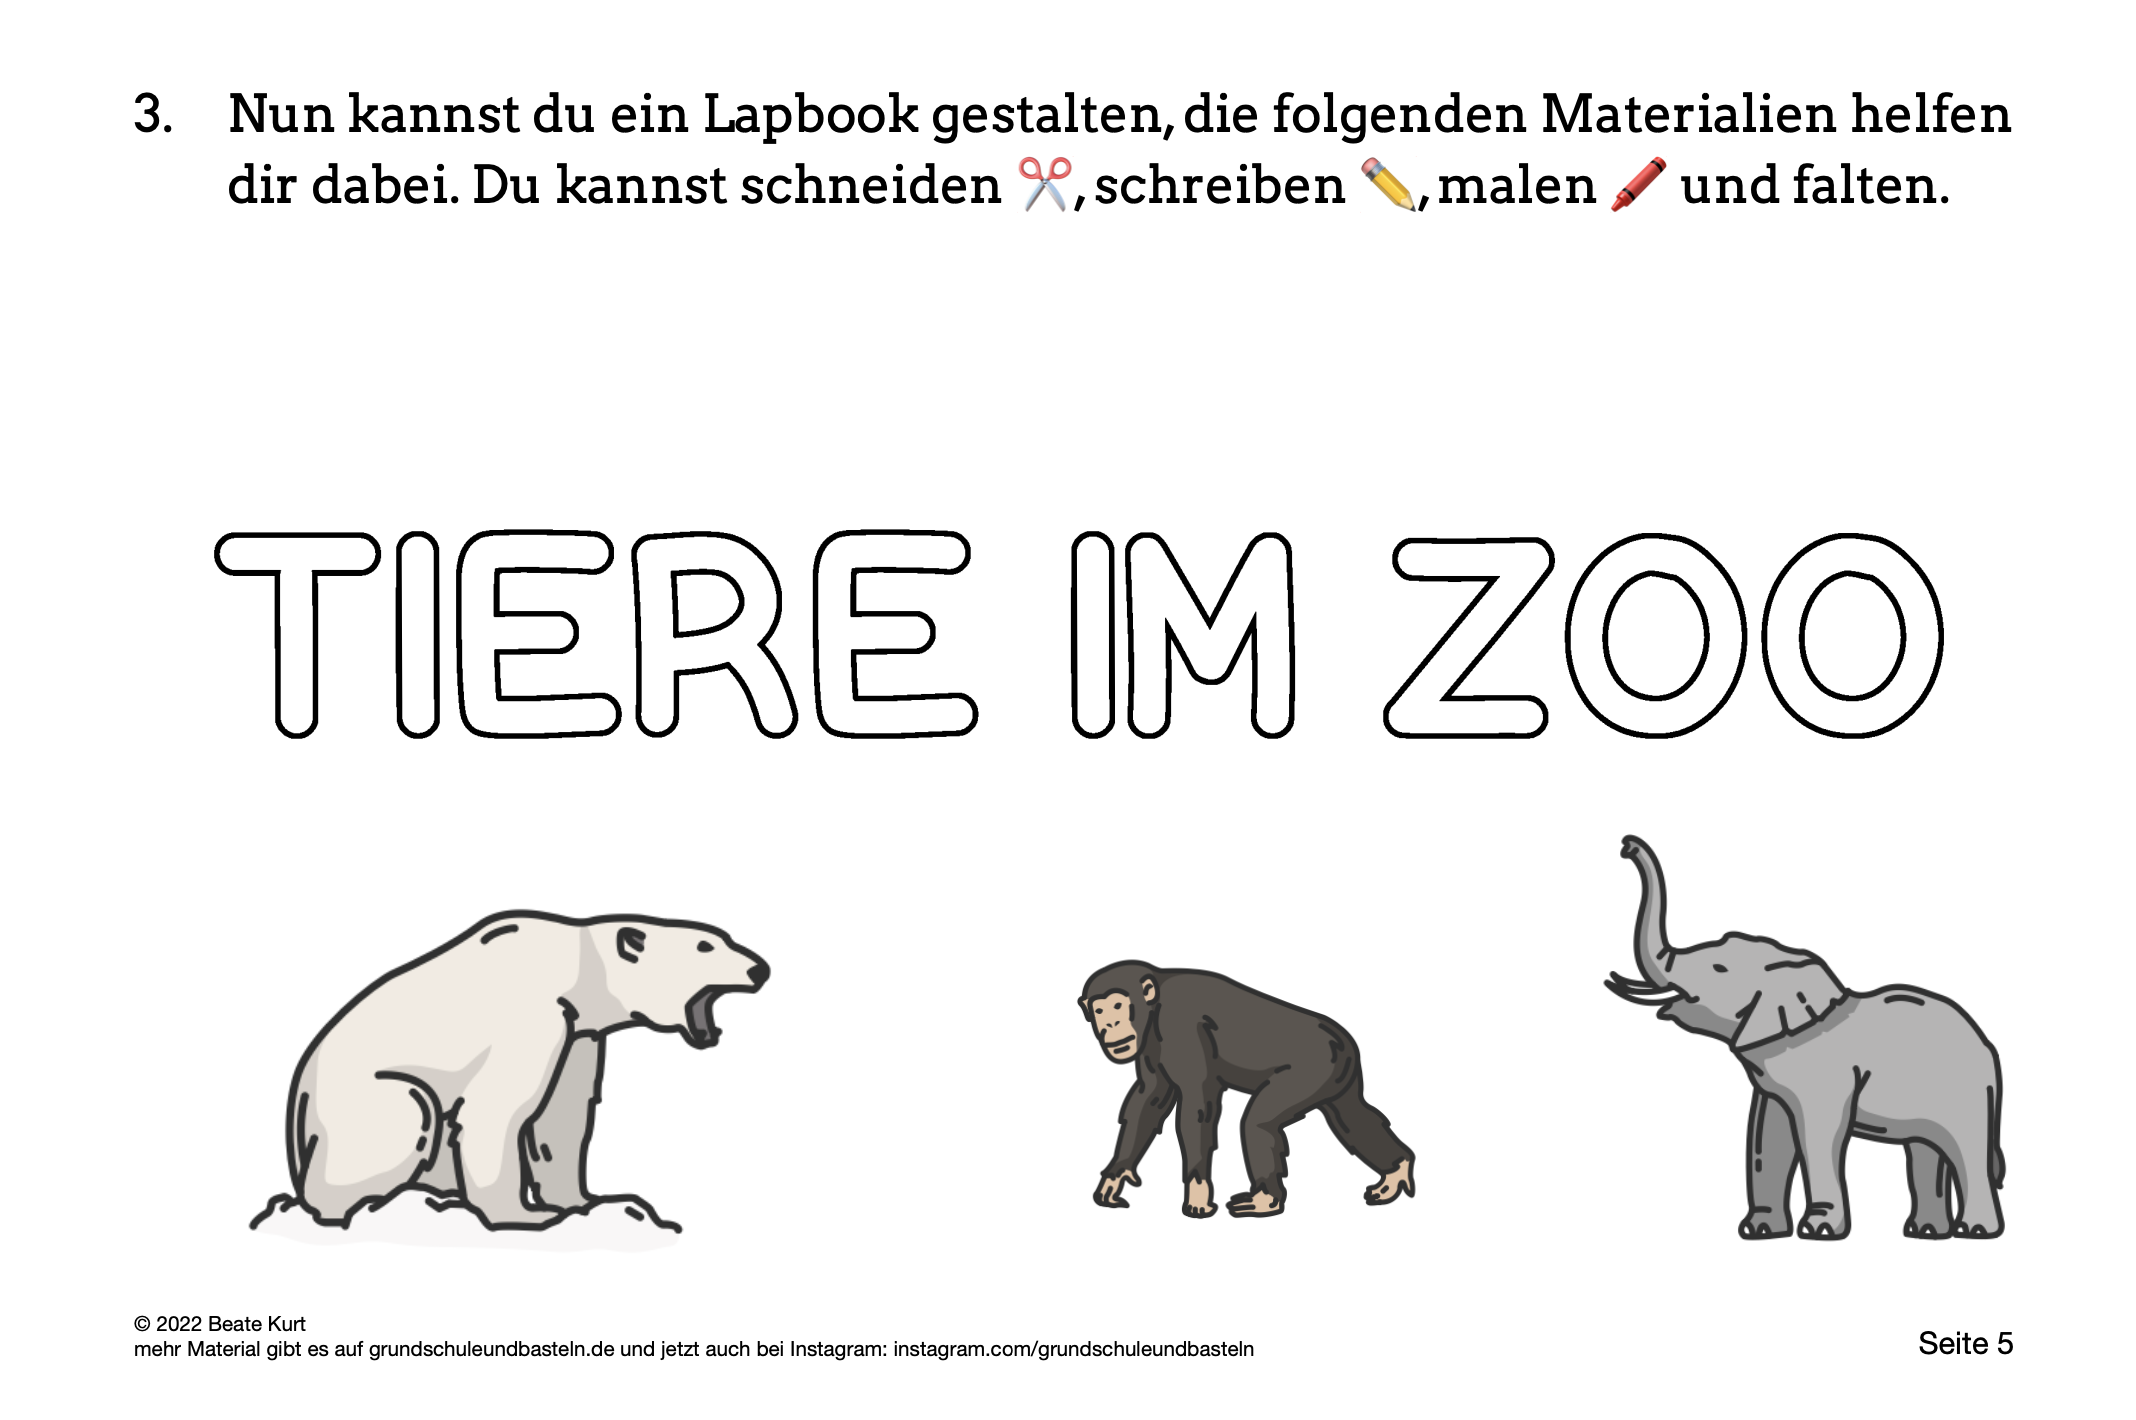  Lapbook Tiere im Zoo 